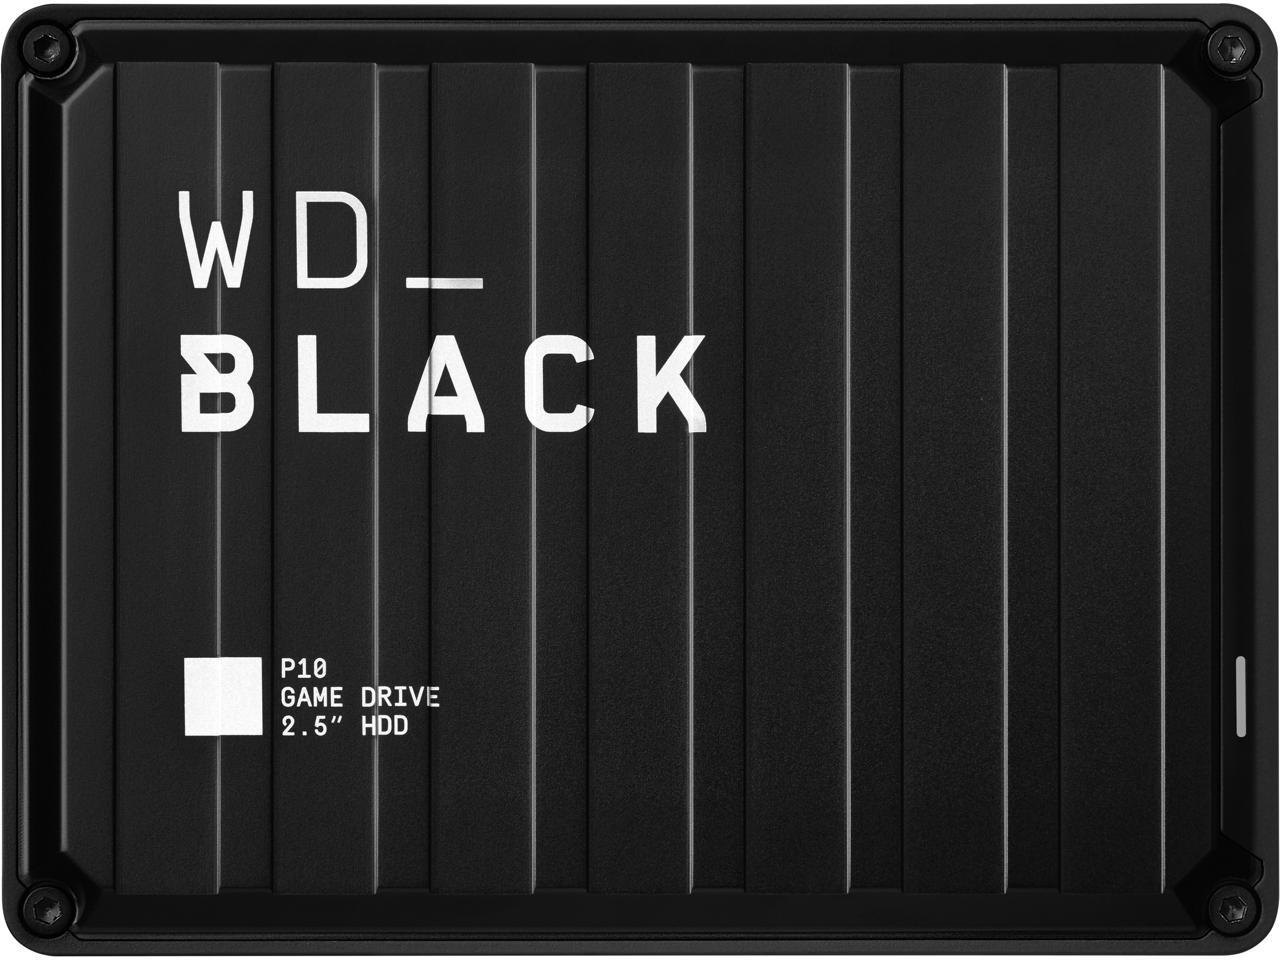 WD Black 5TB P10 Game Drive Portable External Hard Drive @Newegg $110